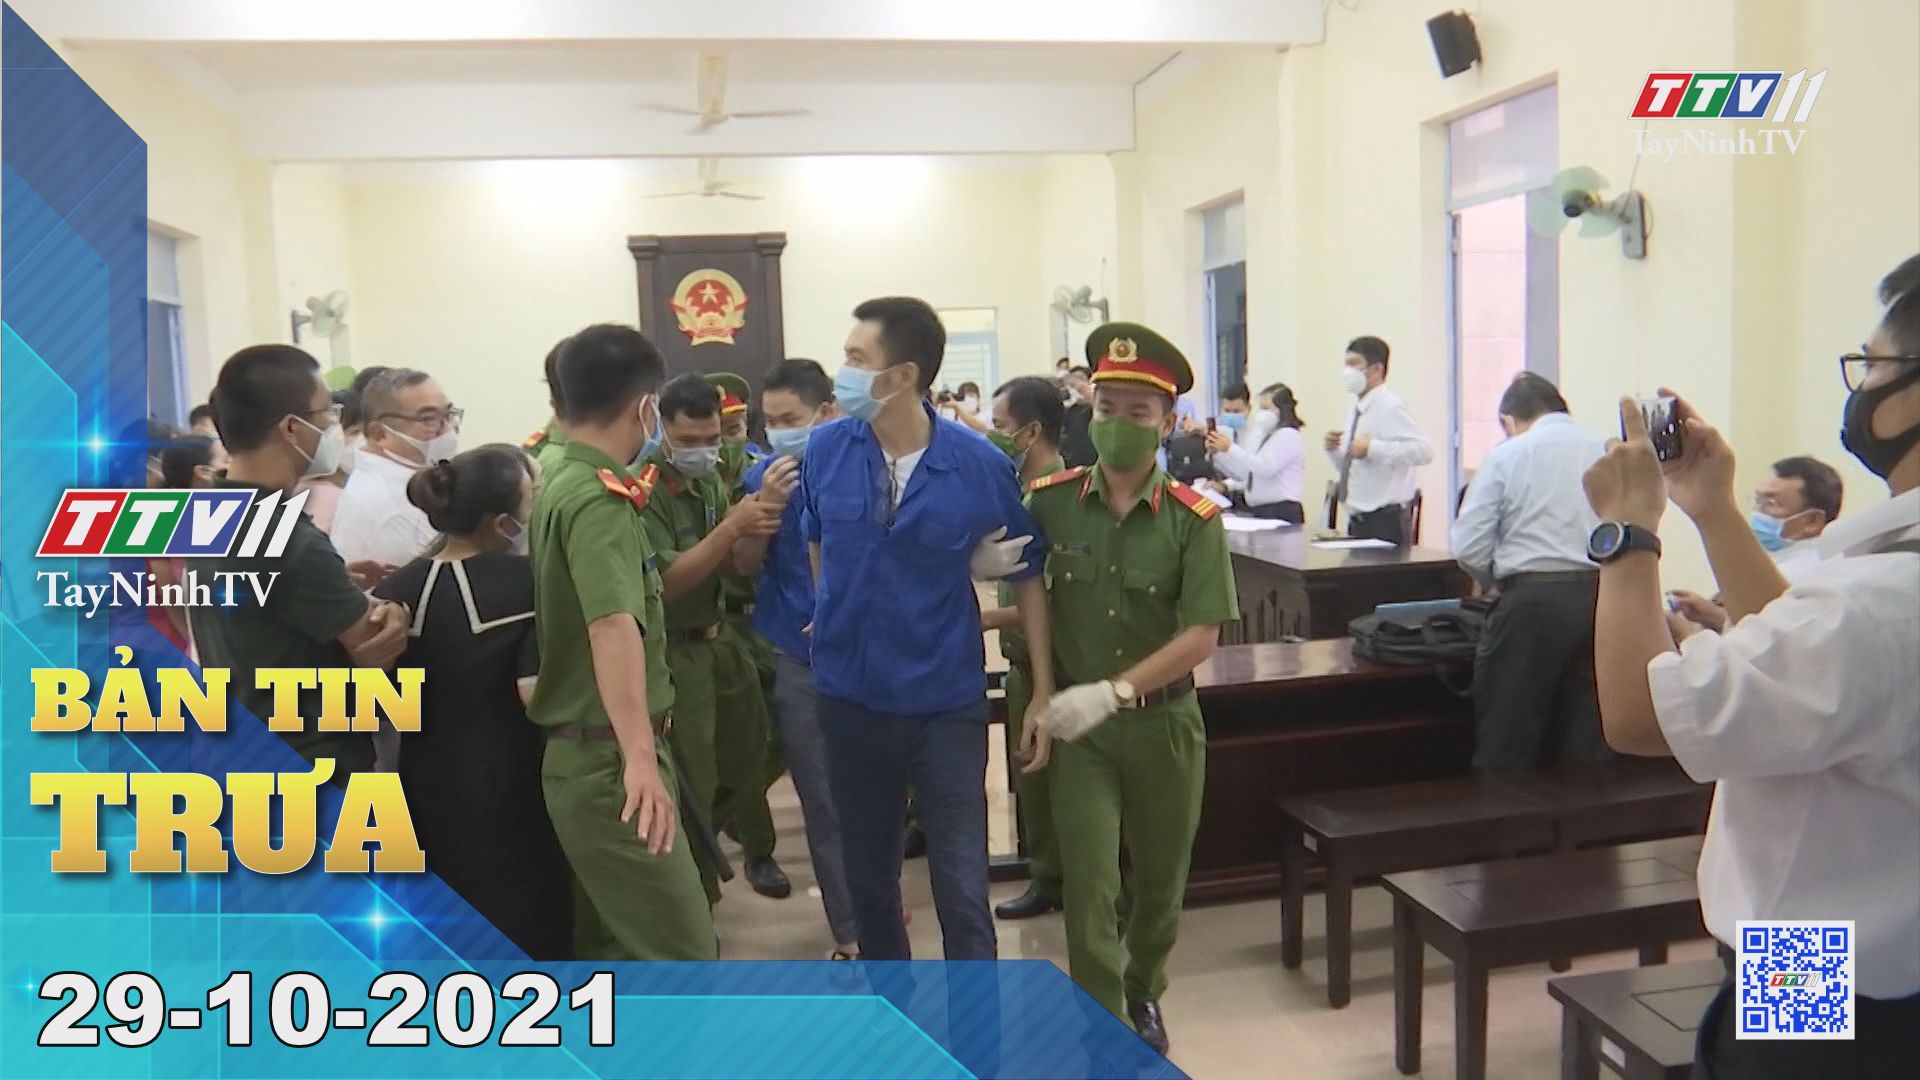 BẢN TIN TRƯA 29/10/2021 | Tin tức hôm nay | TayNinhTV